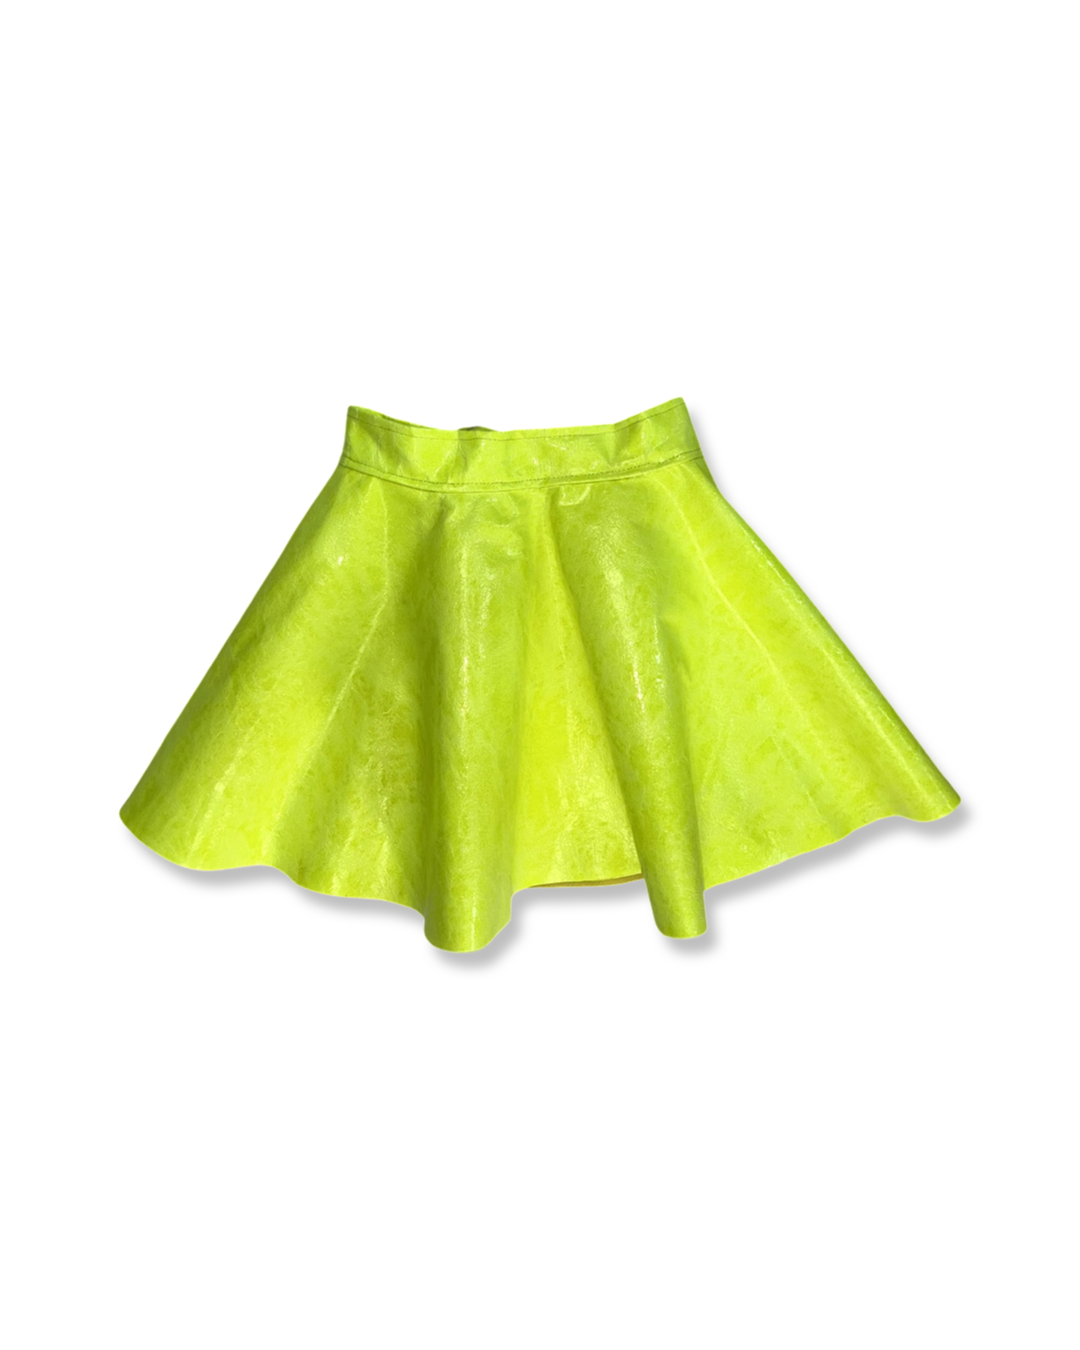 Uniform Circle Skirt in Neon Yellow